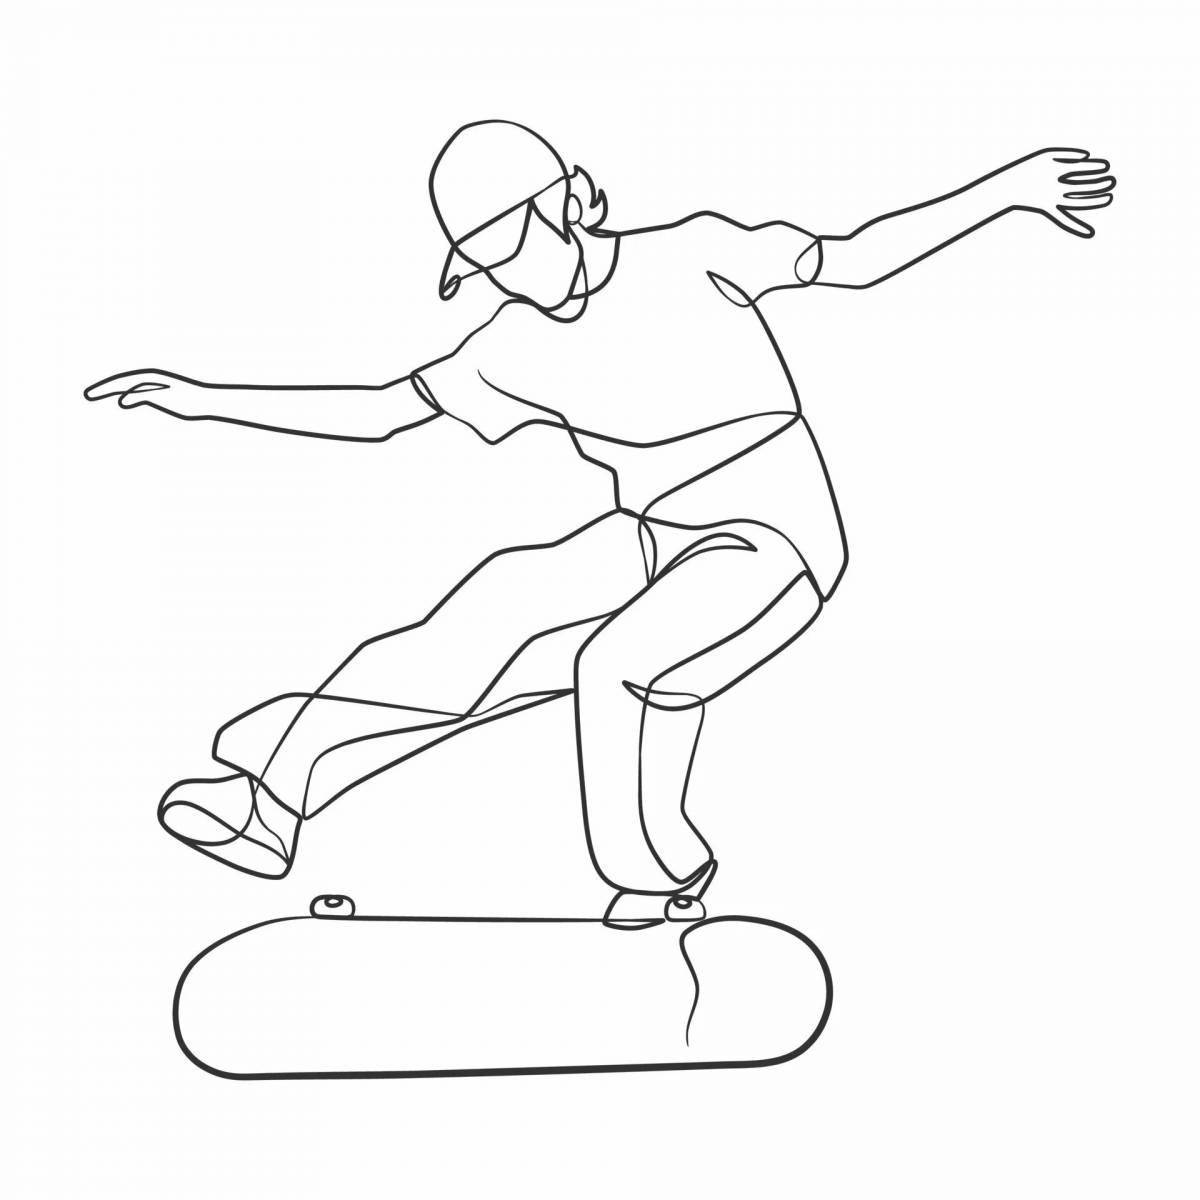 Innovative skateboarder coloring page